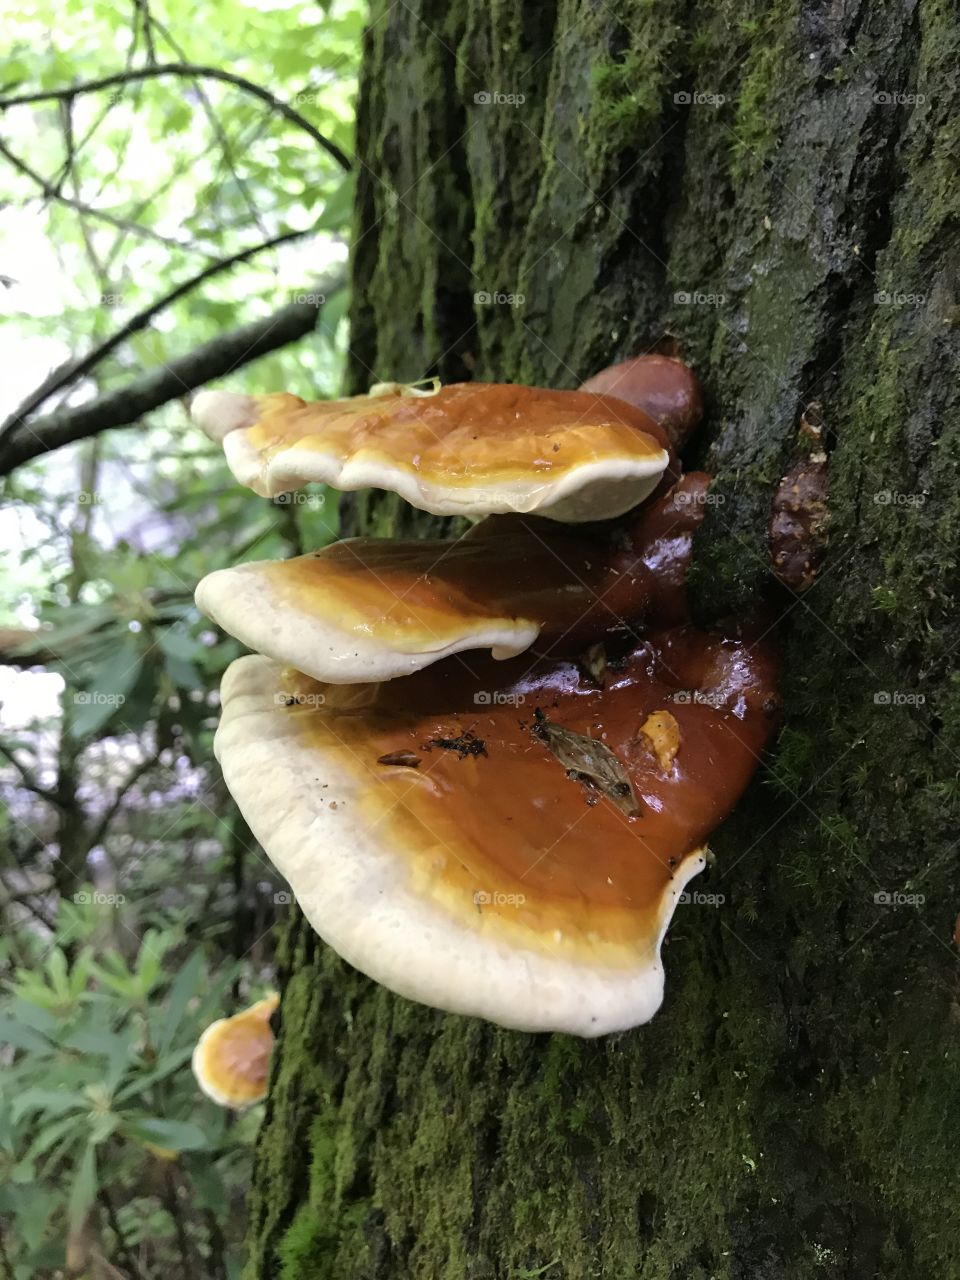 Shelf fungus growing on pine tree near Looking Glass Falls in Brevard, NC